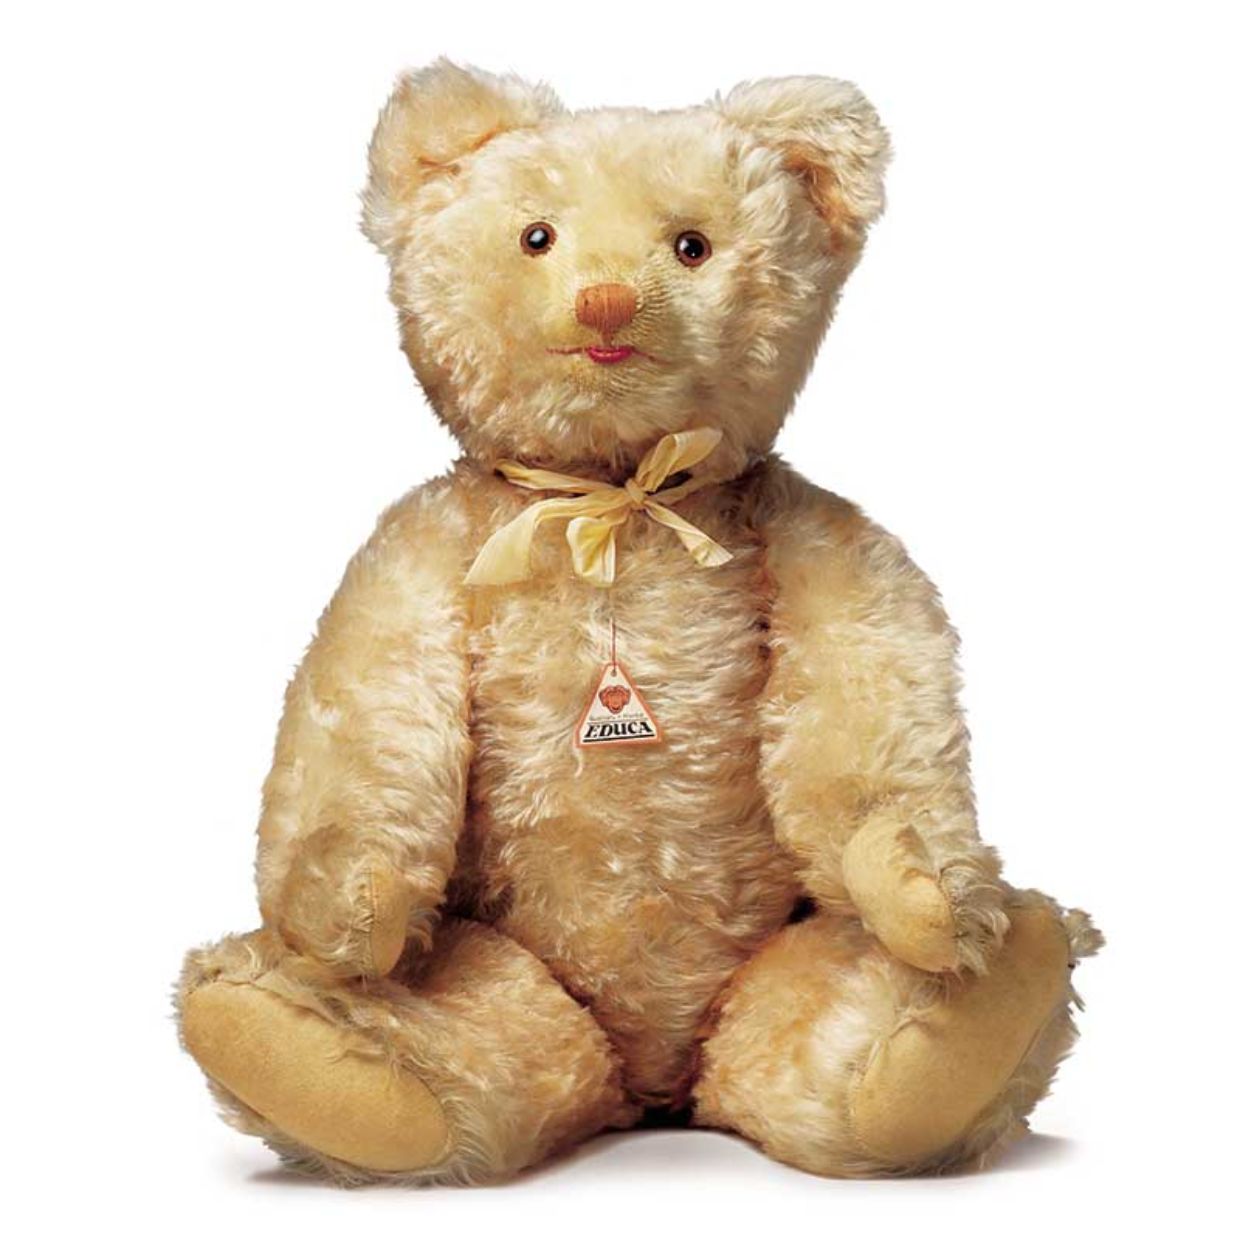 Teddy bears 3, 1930, Germany